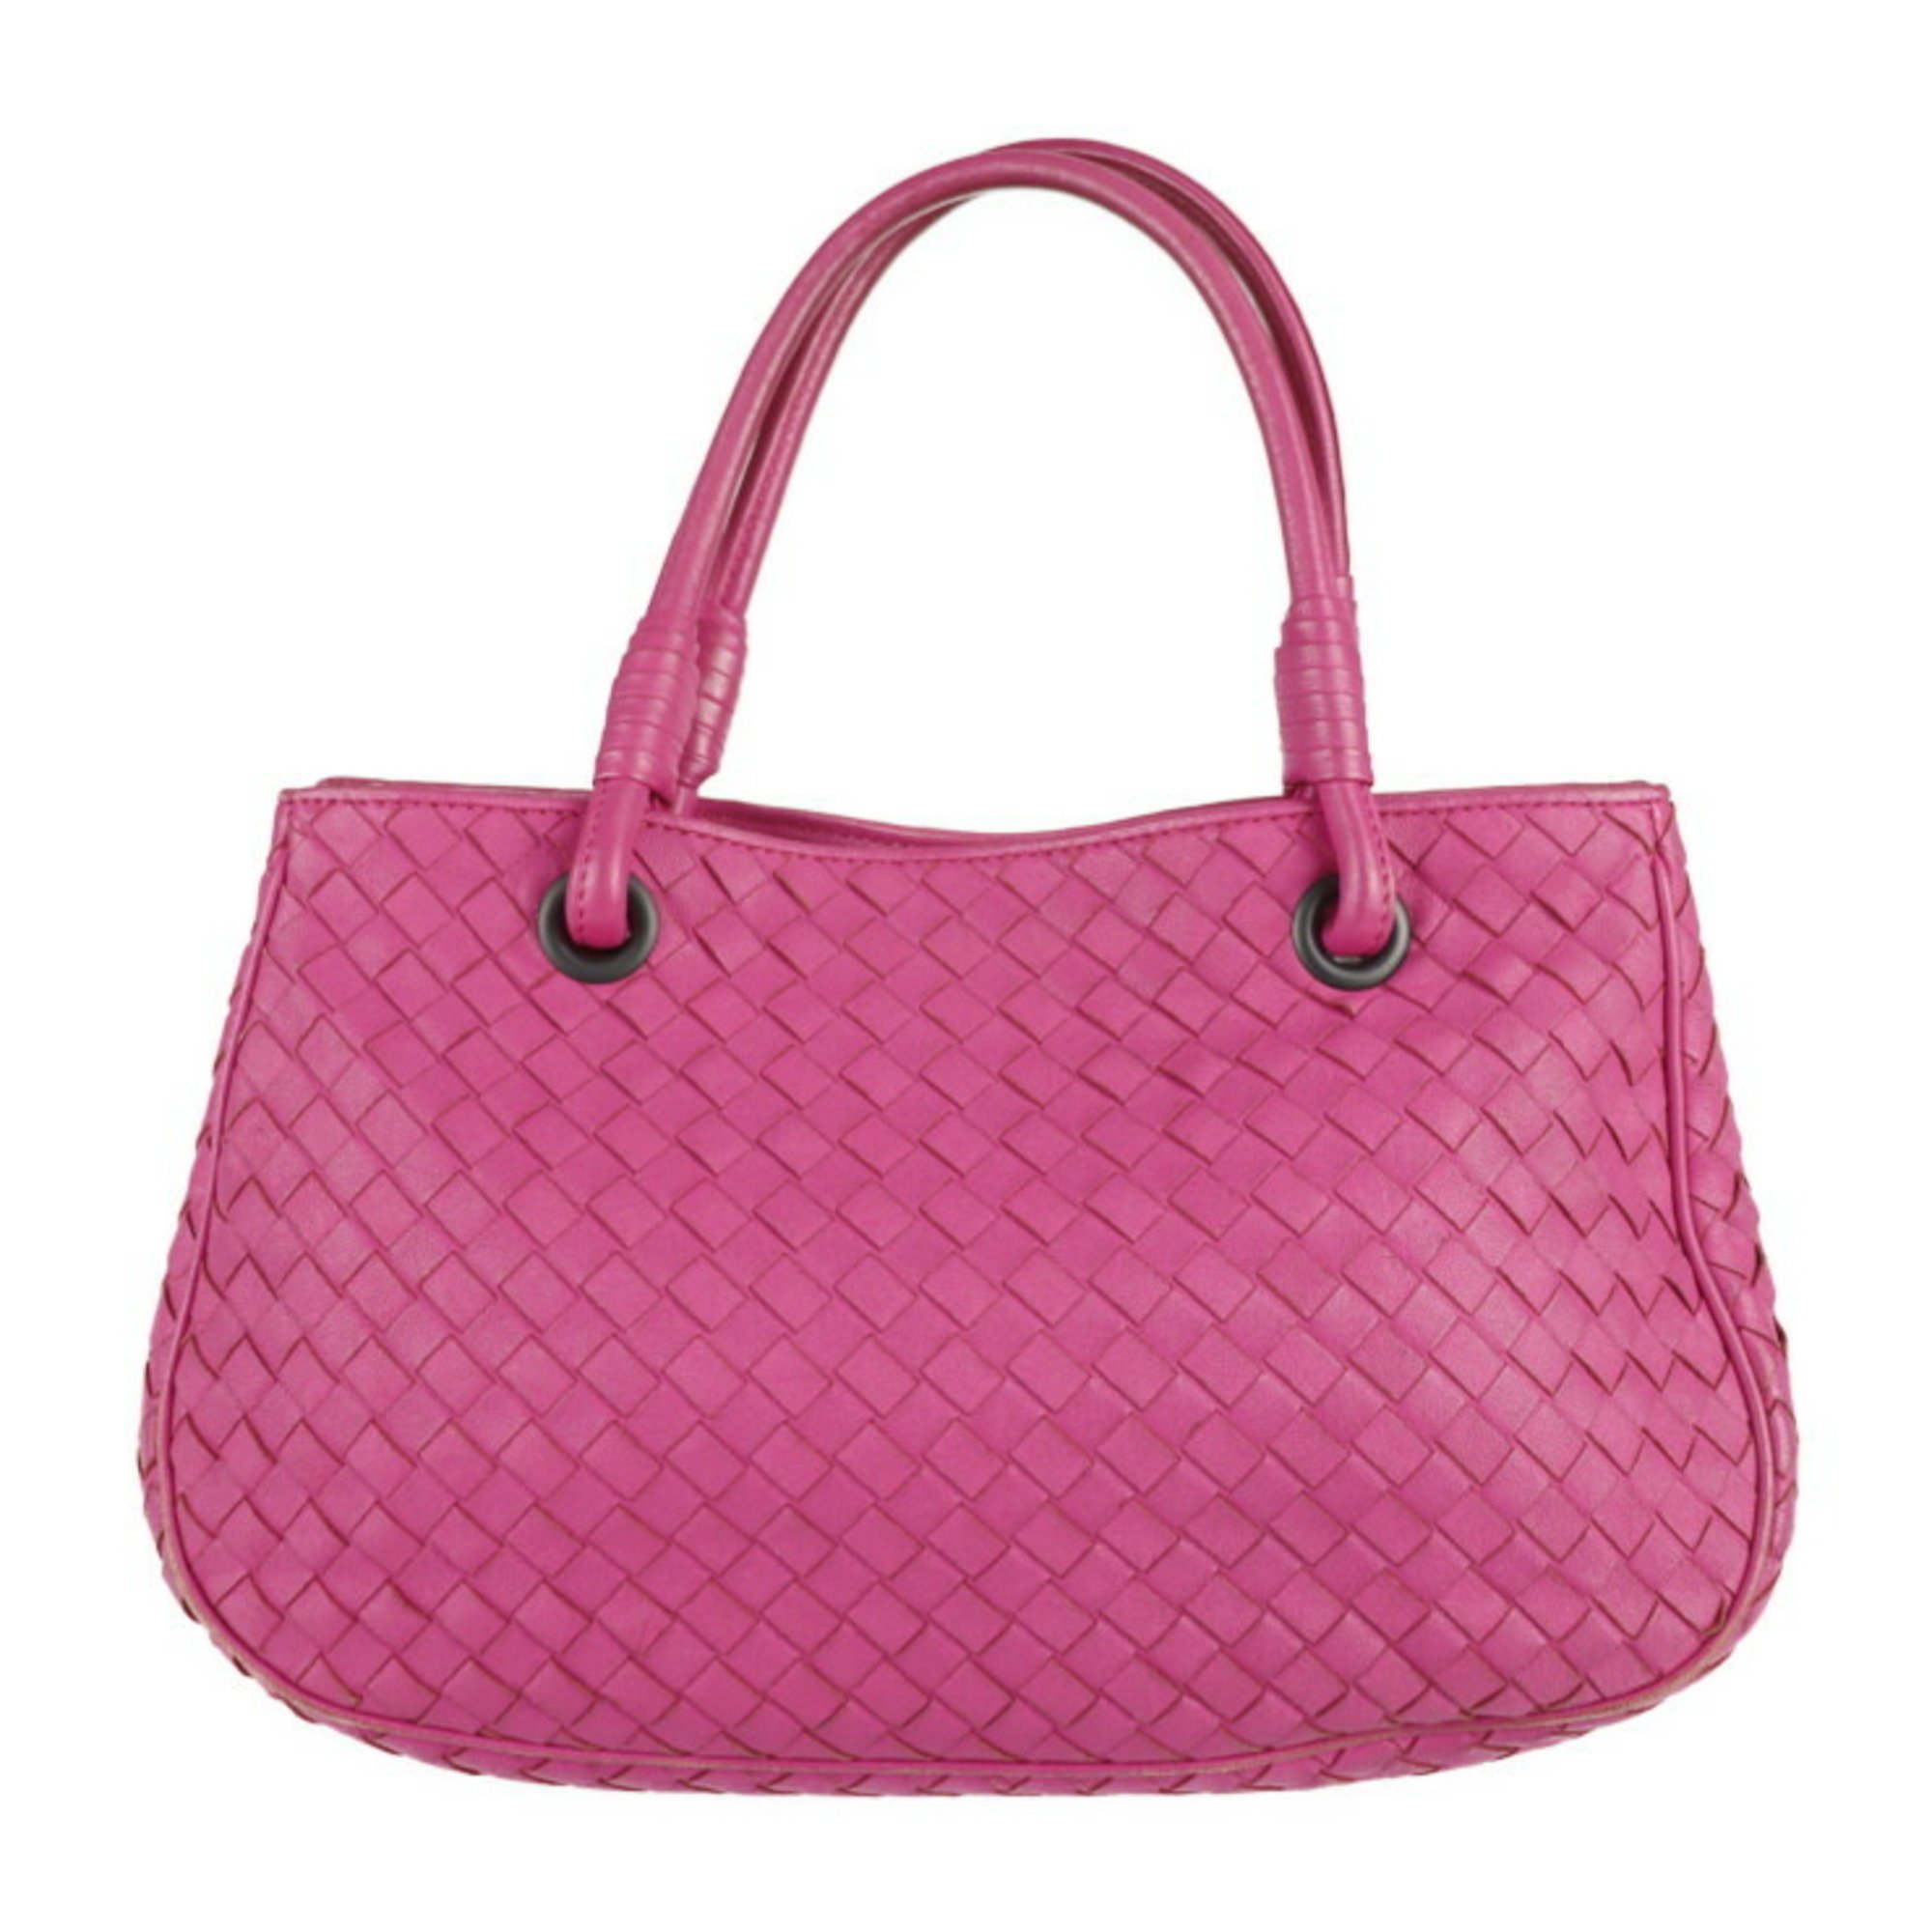 BOTTEGA VENETA Bottega Veneta Satchel Intrecciato Handbag 148323 Leather Pink